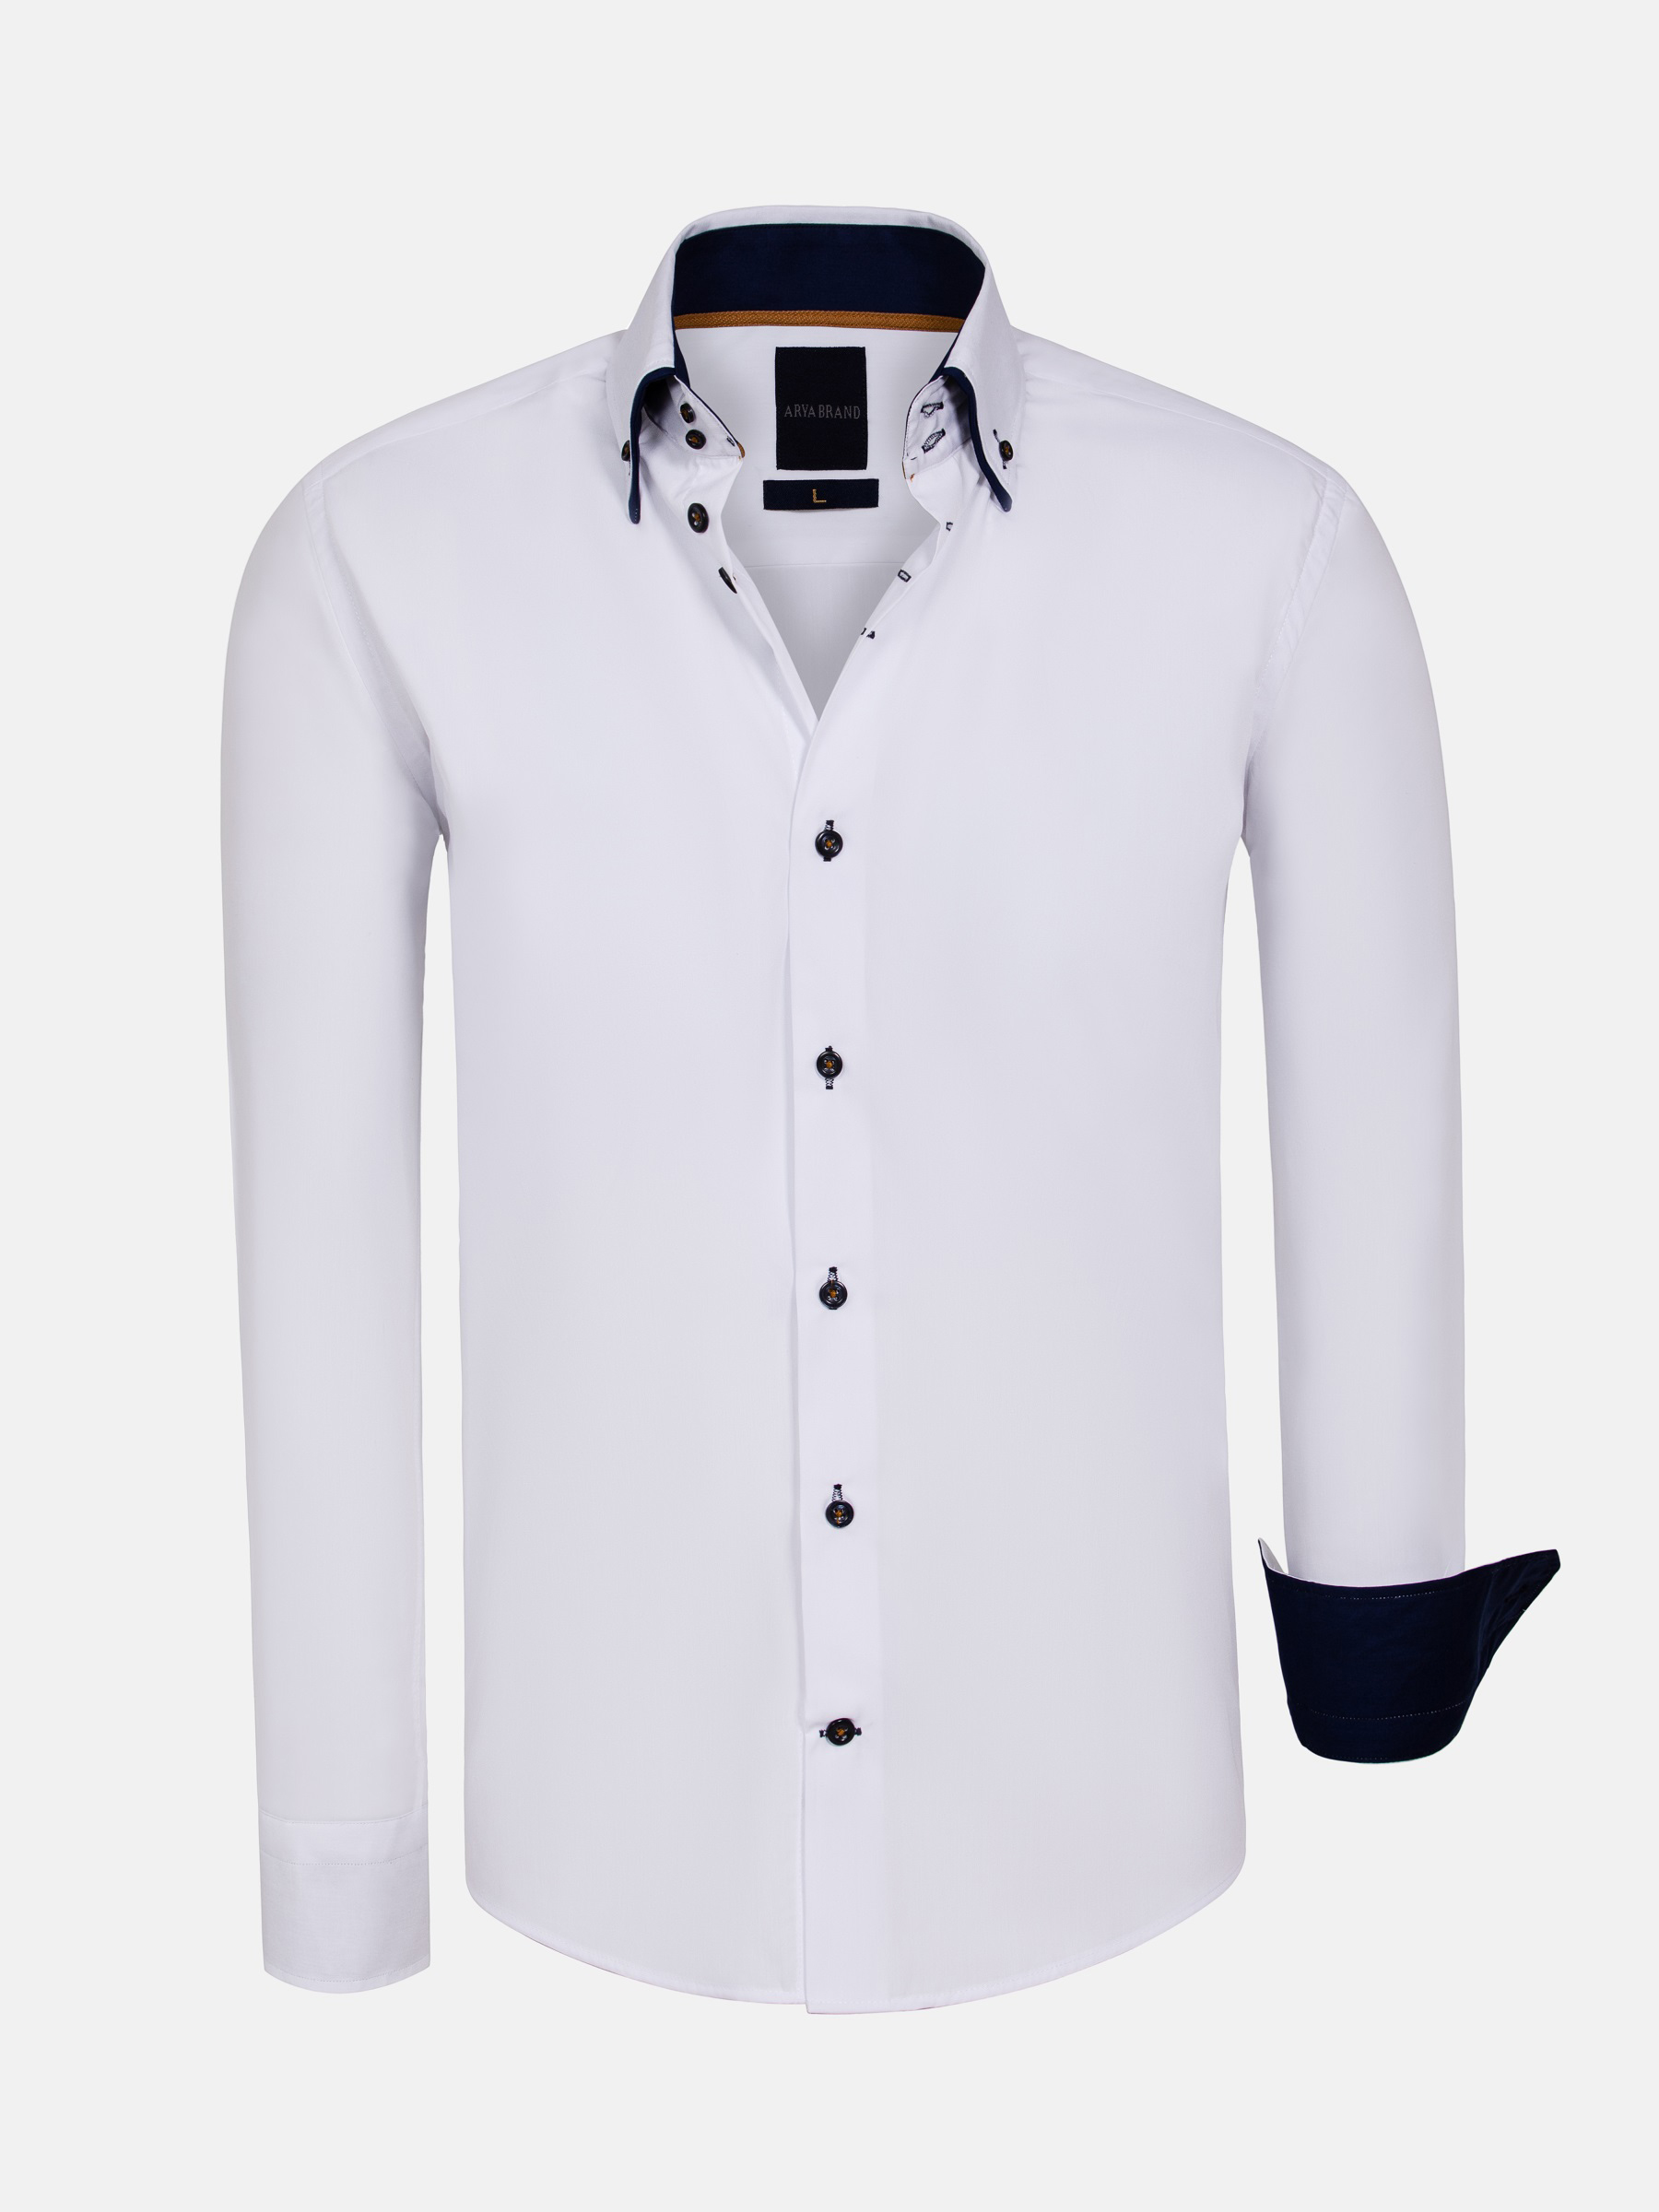 WAM Denim Metz Solid White Overhemd Lange Mouw-